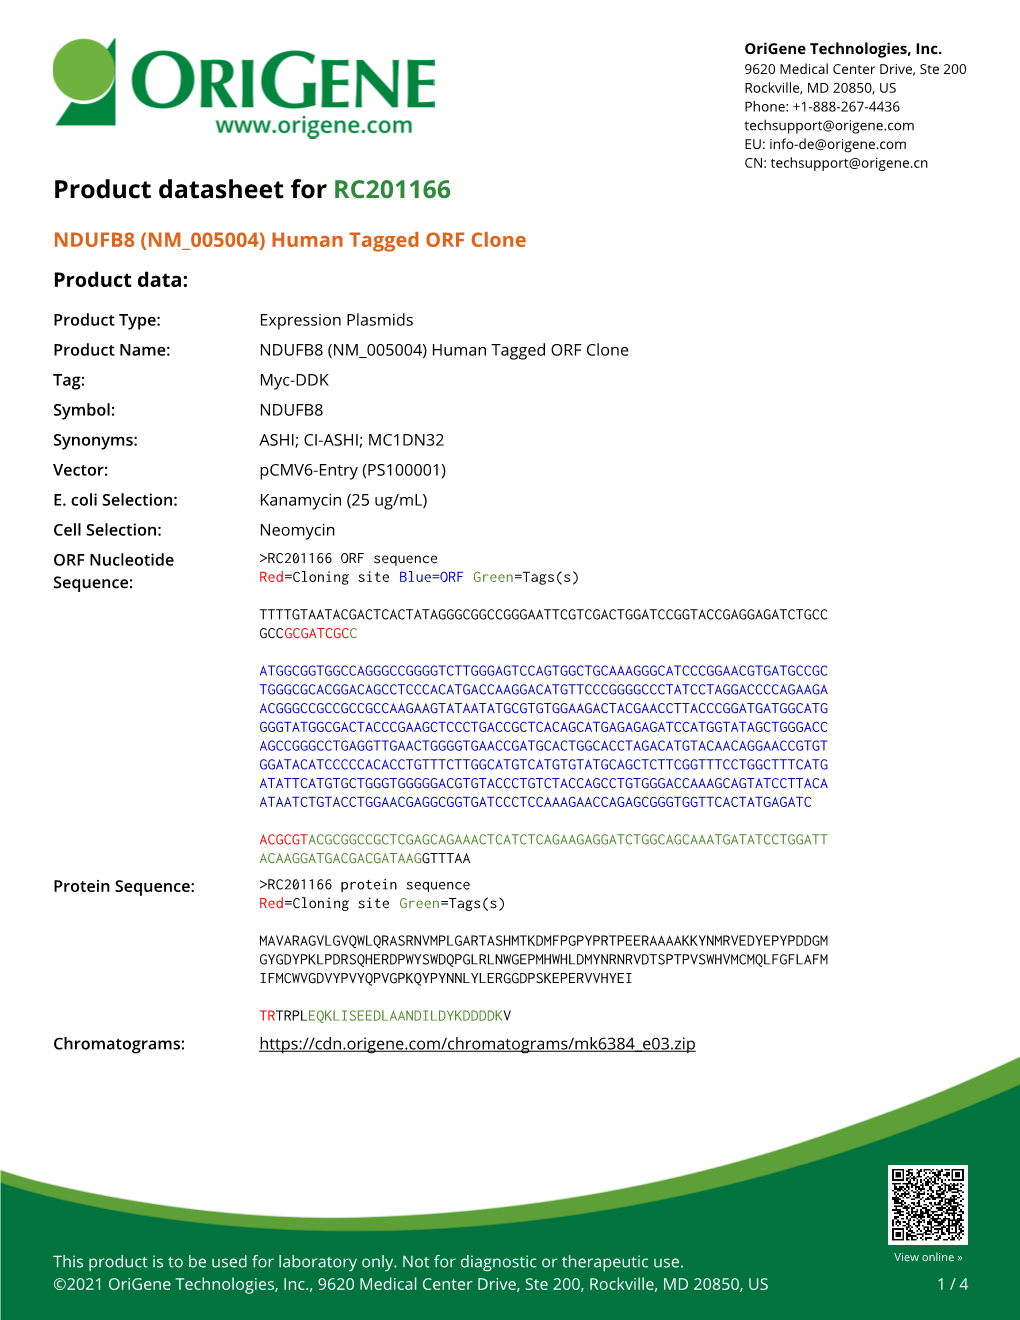 NDUFB8 (NM 005004) Human Tagged ORF Clone Product Data